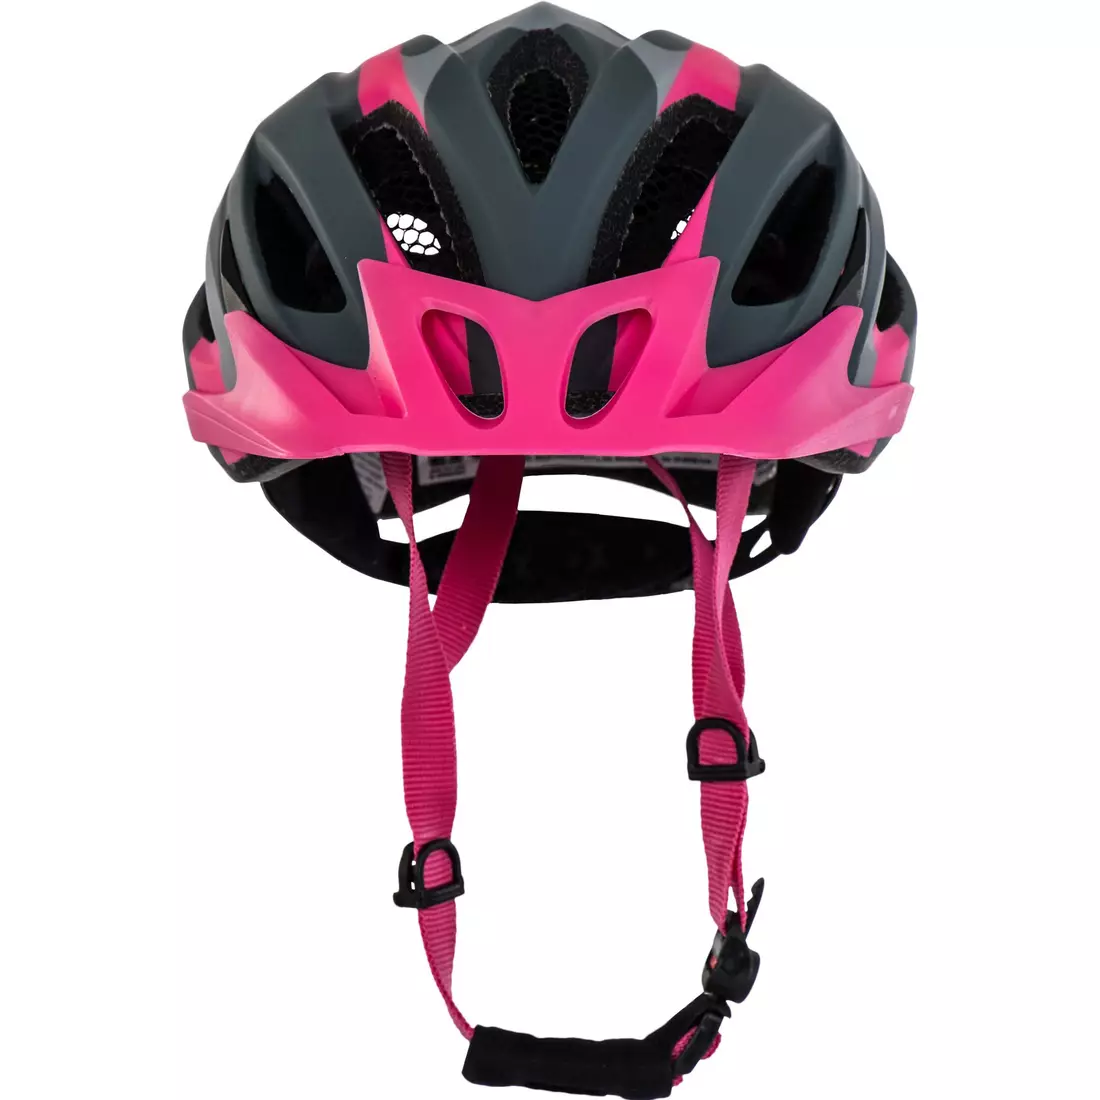 UVEX VIVA 2 bicycle helmet 410104mat18 gray pink matt